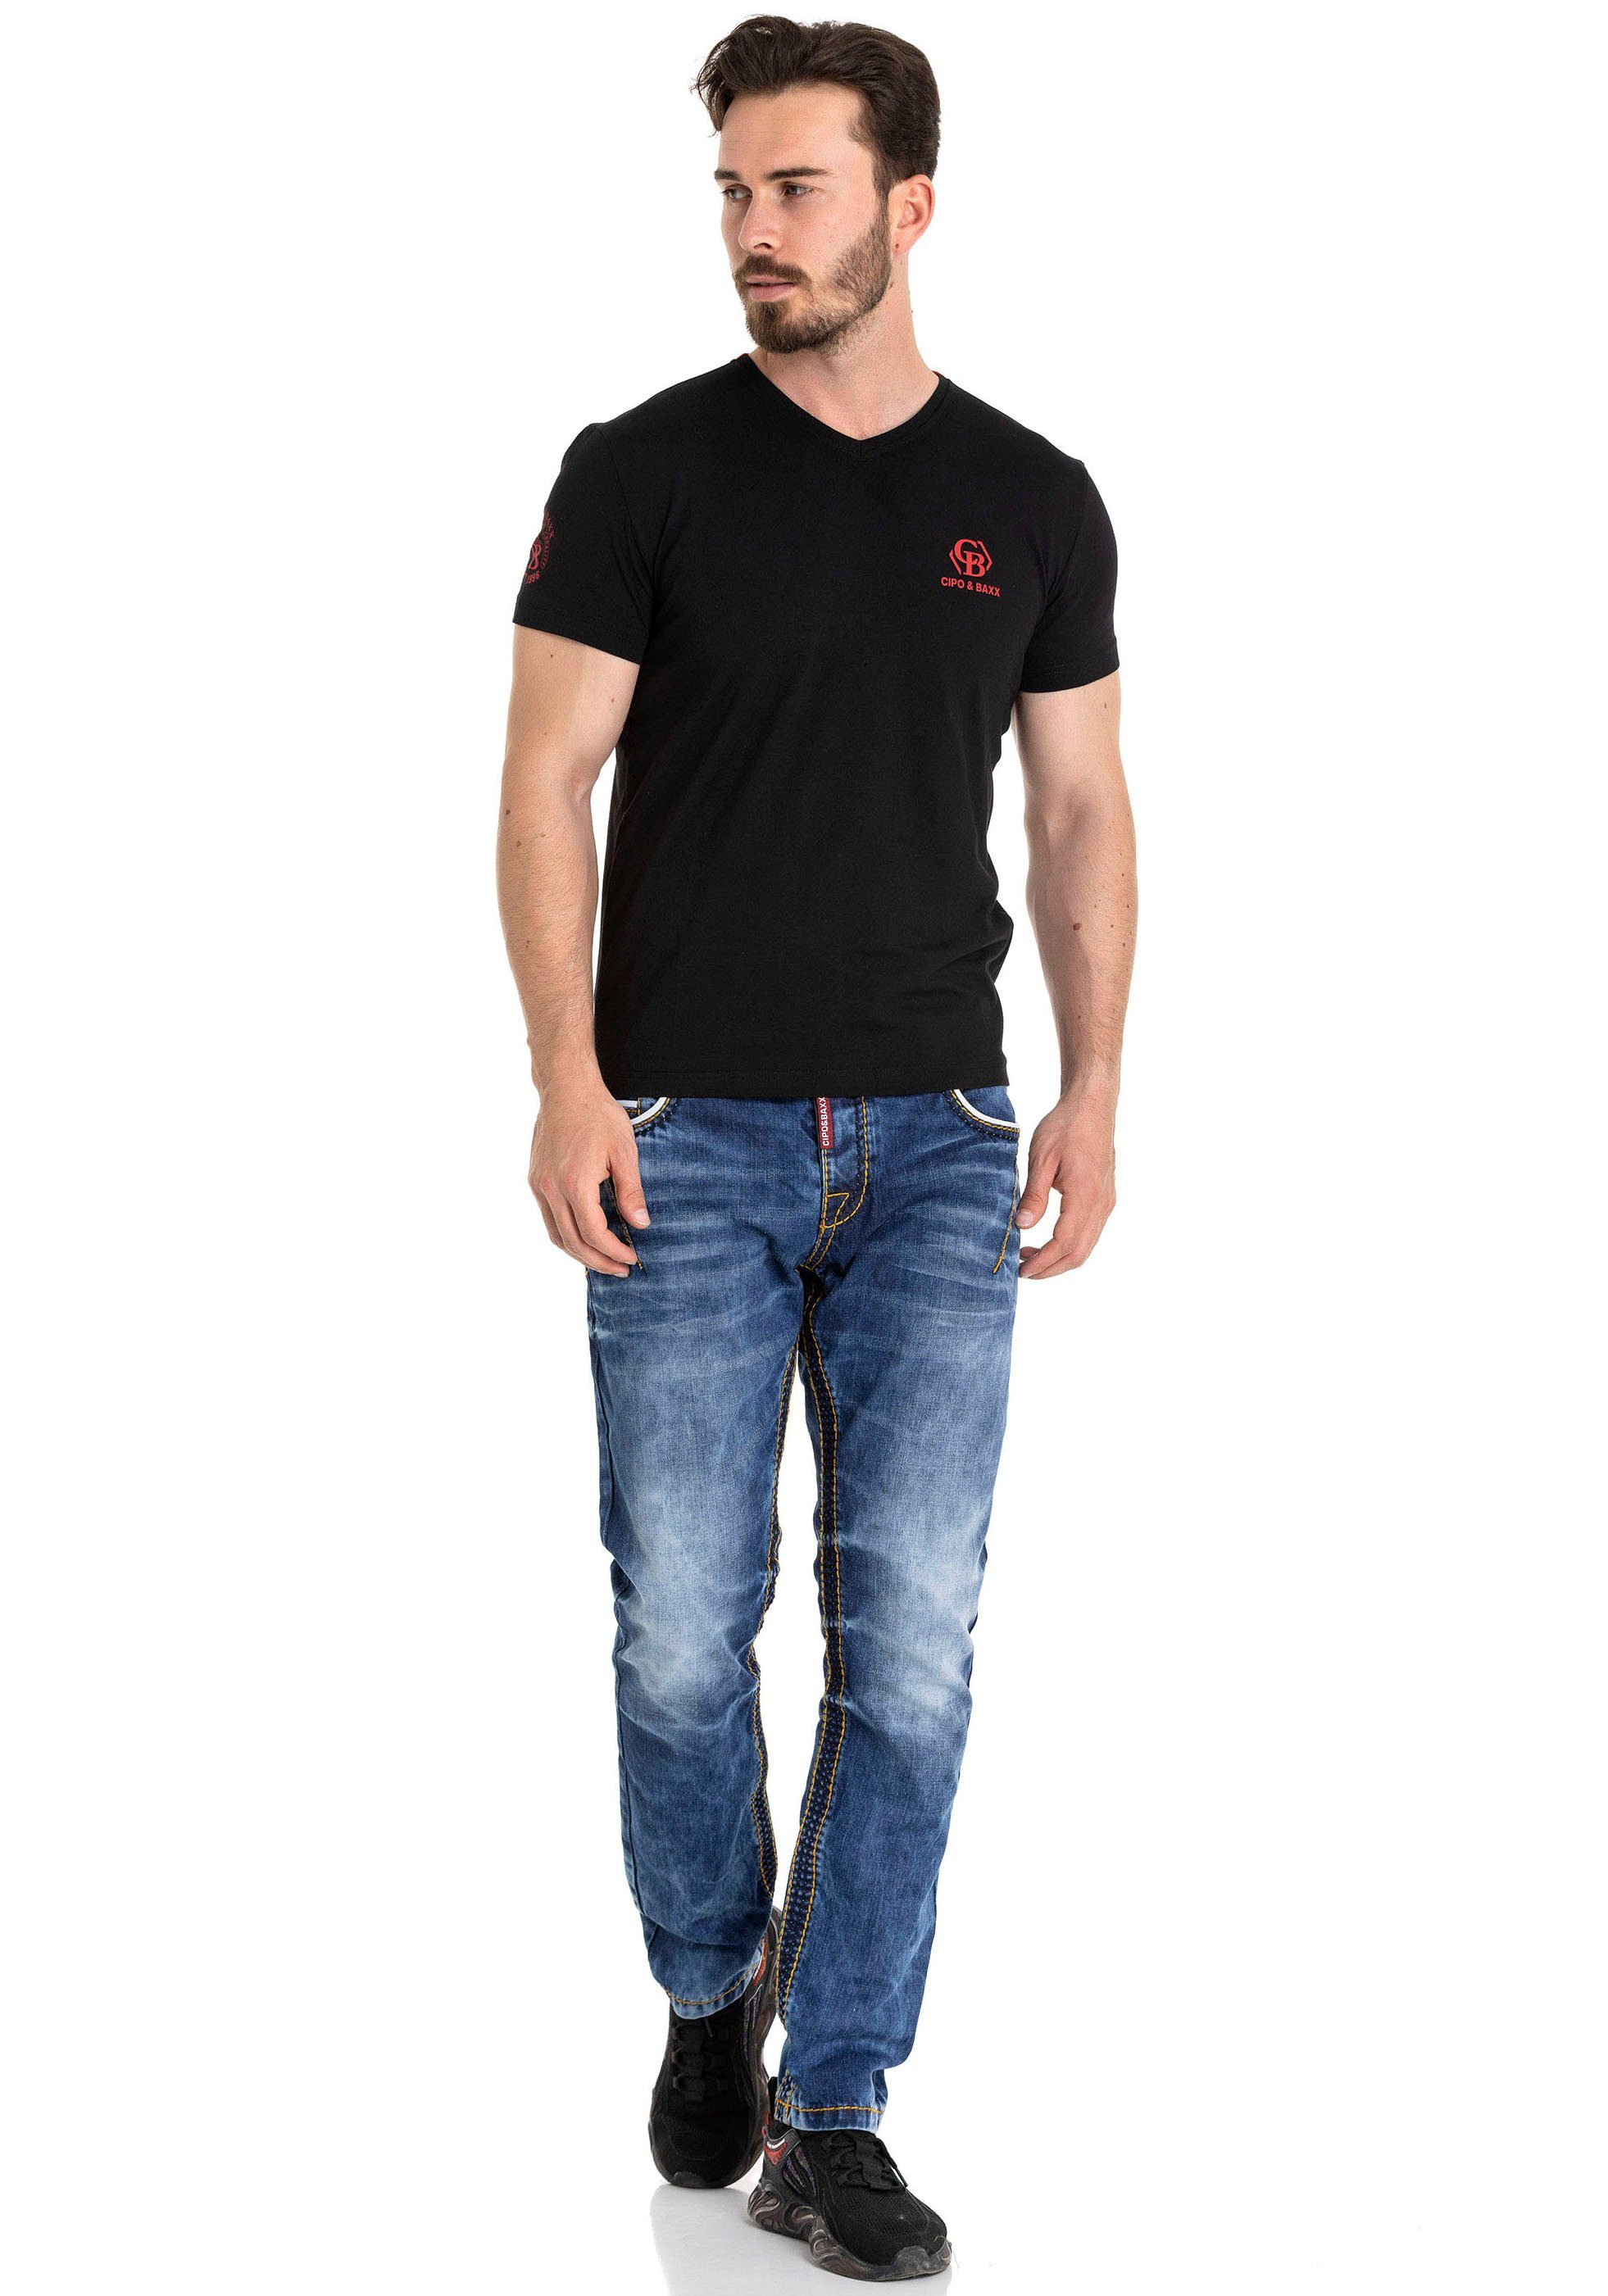 Cipo & Baxx V-Shirt Samt-Optik mit in black Markenlabel